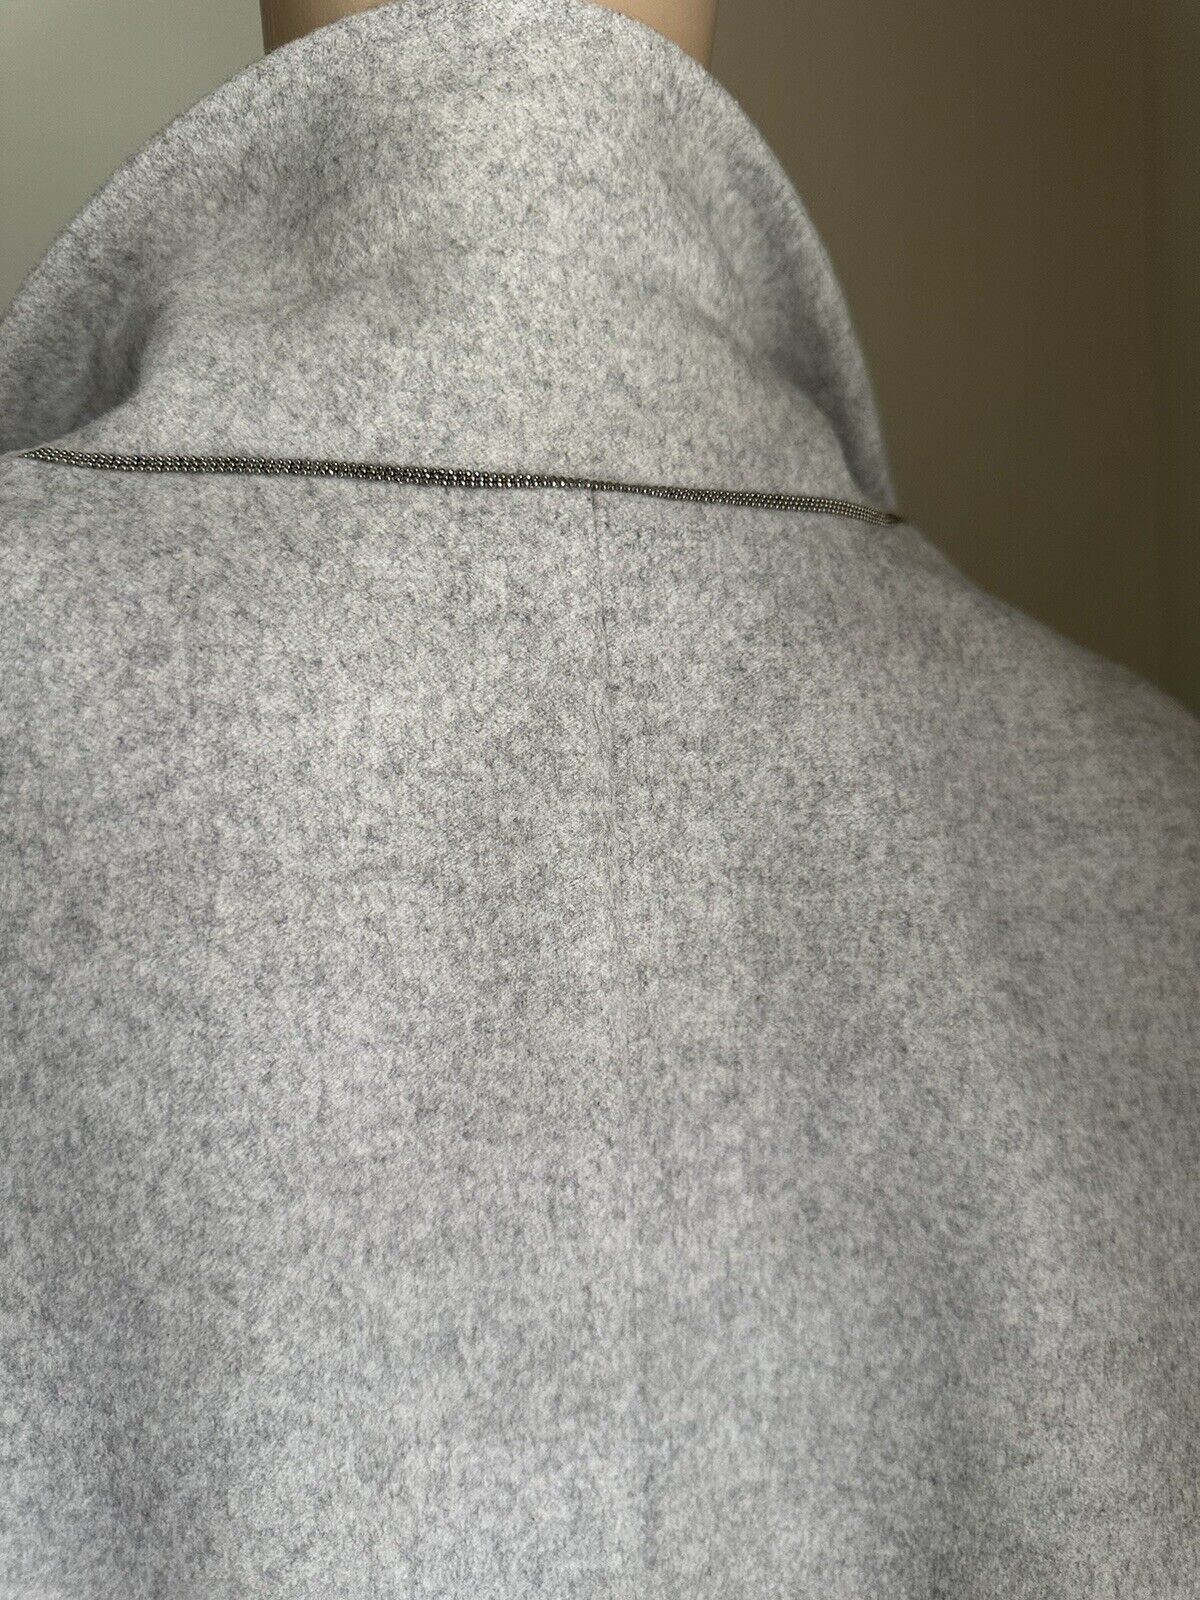 New $7495 Brunello Cucinelli Water Resistant Wool Blend Coat Pebbl Gray 40/4